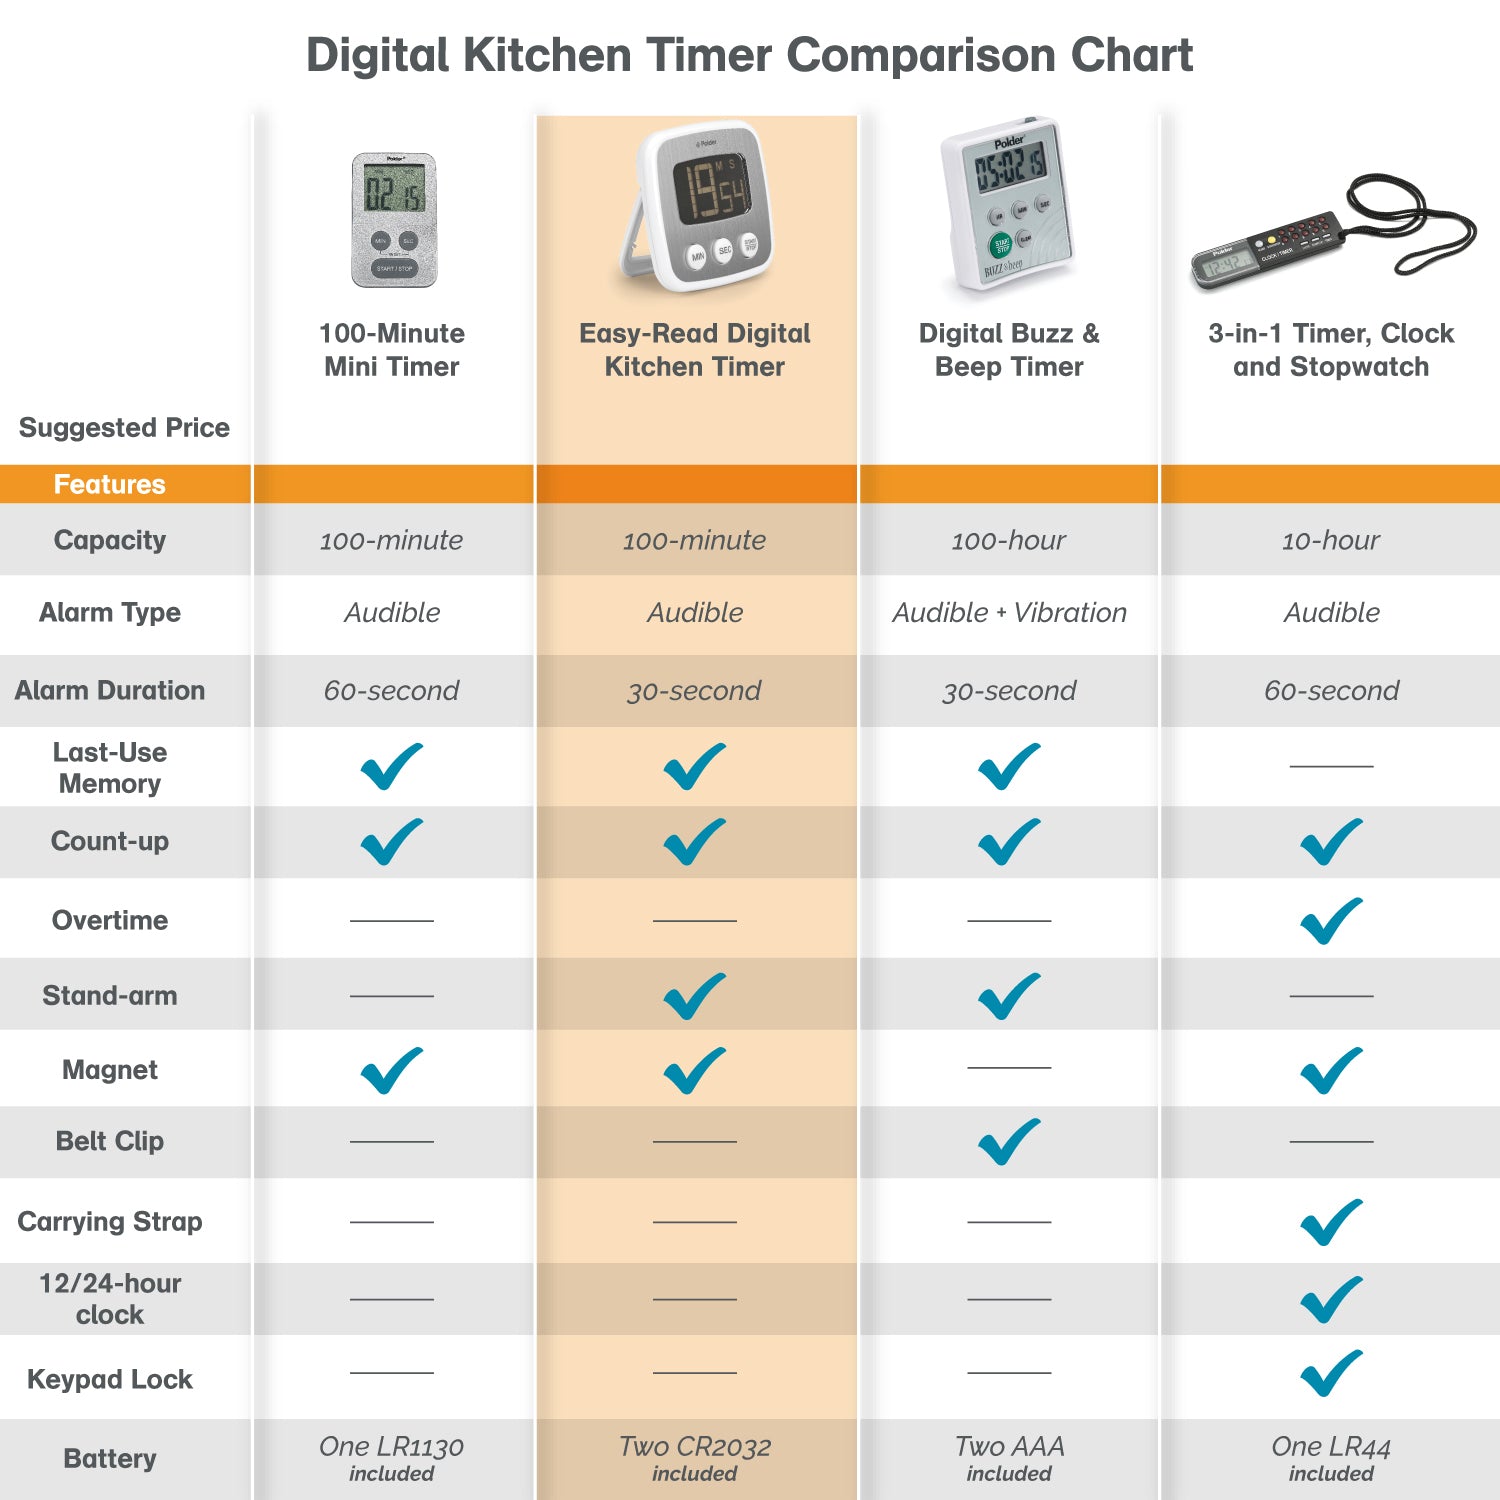 Kitchen Timer, Newentor Digital Productivity Timer with Alarm Clock, K